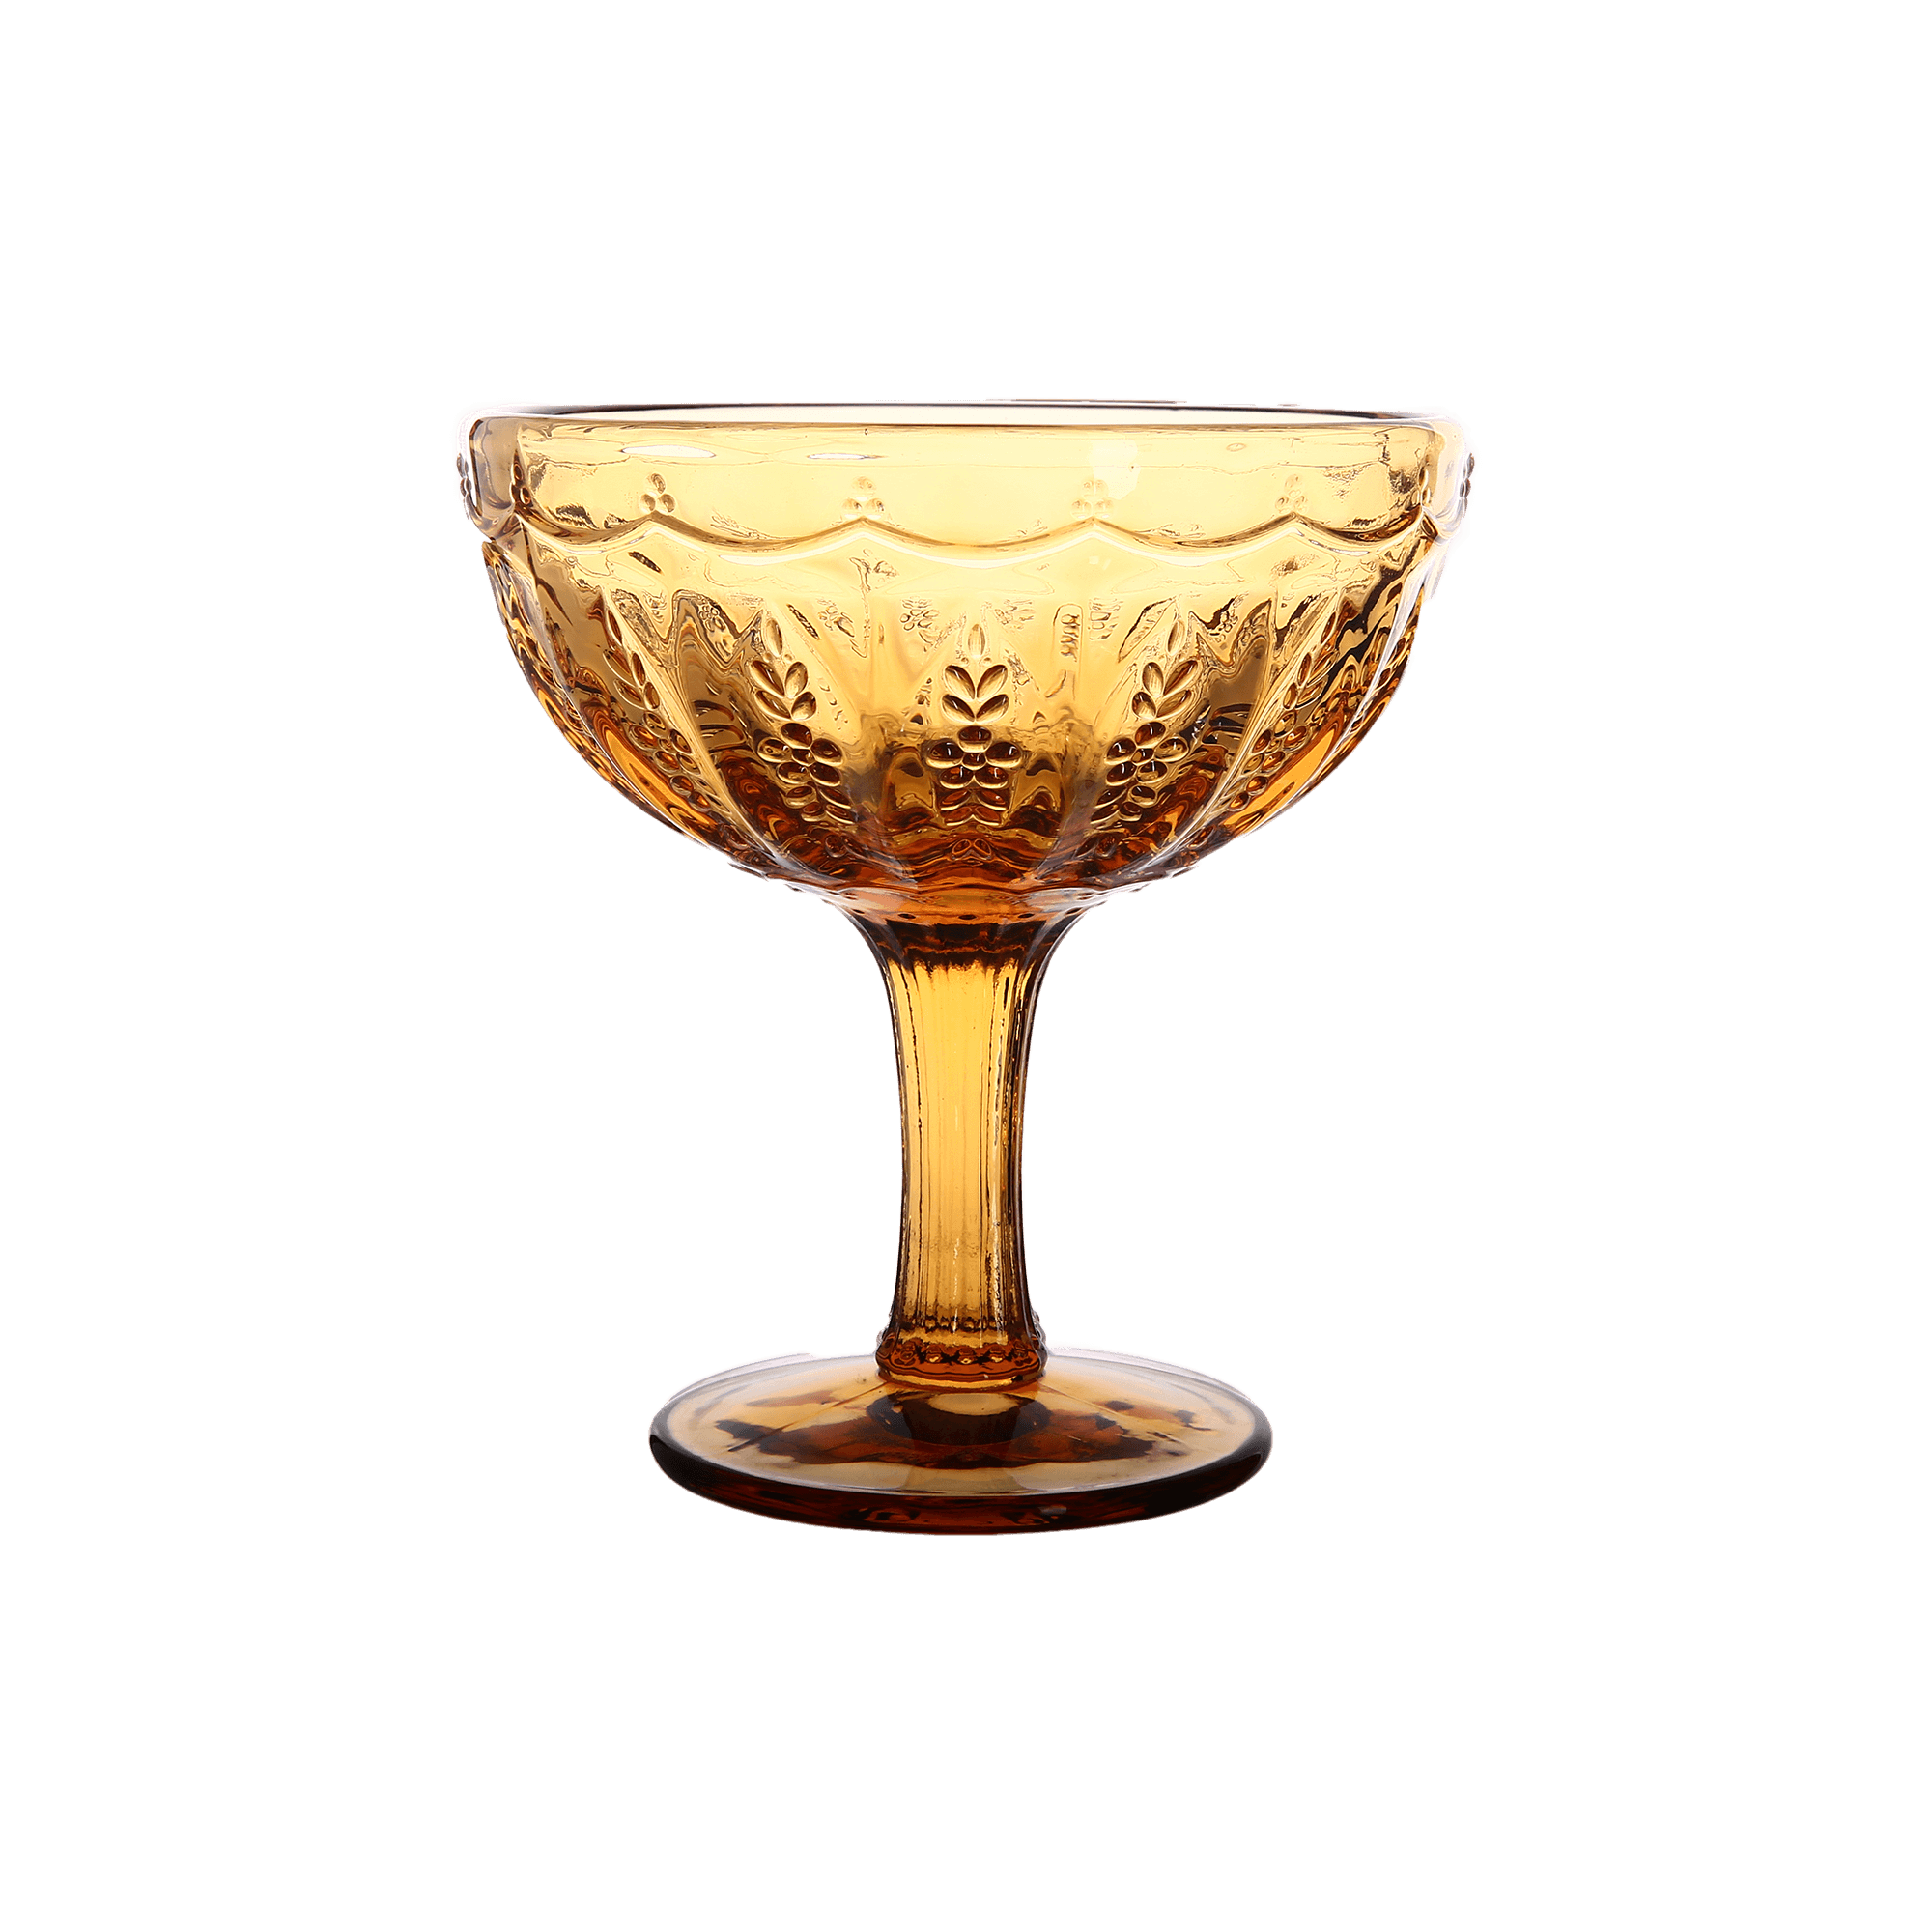 wandering folk - margarita glass set of 2 - amber